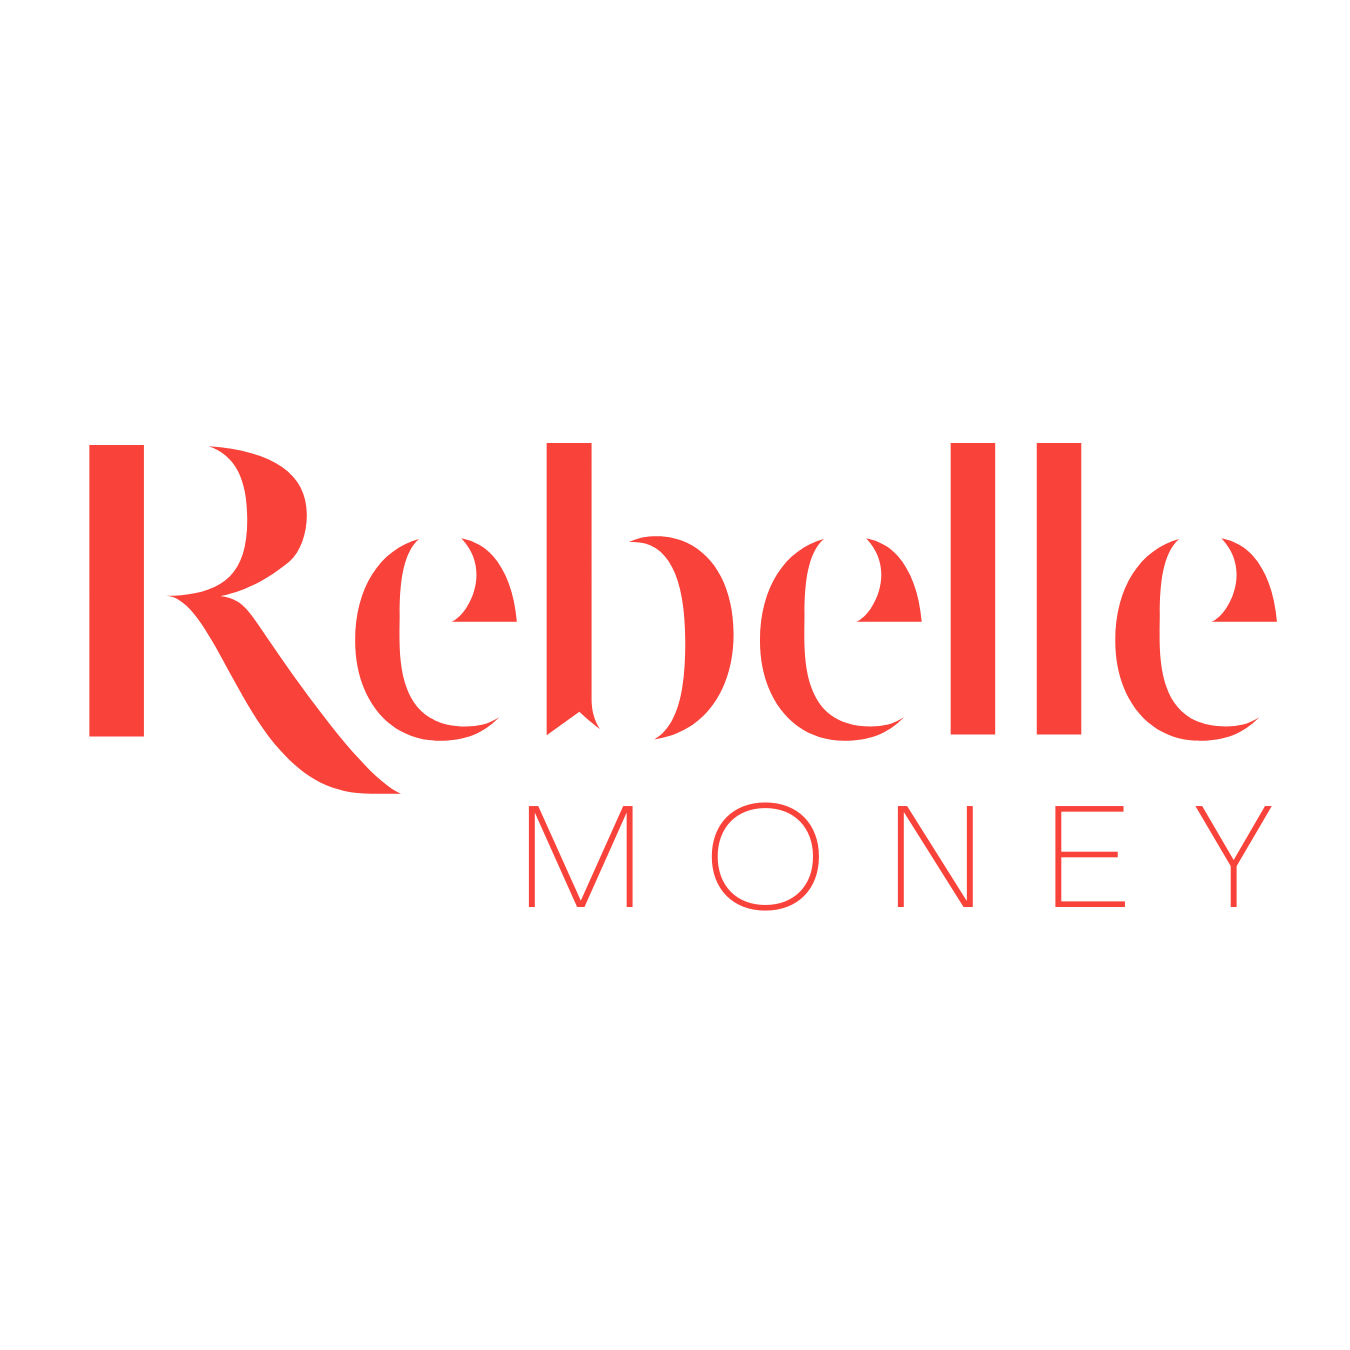 Rebelle Money inc.